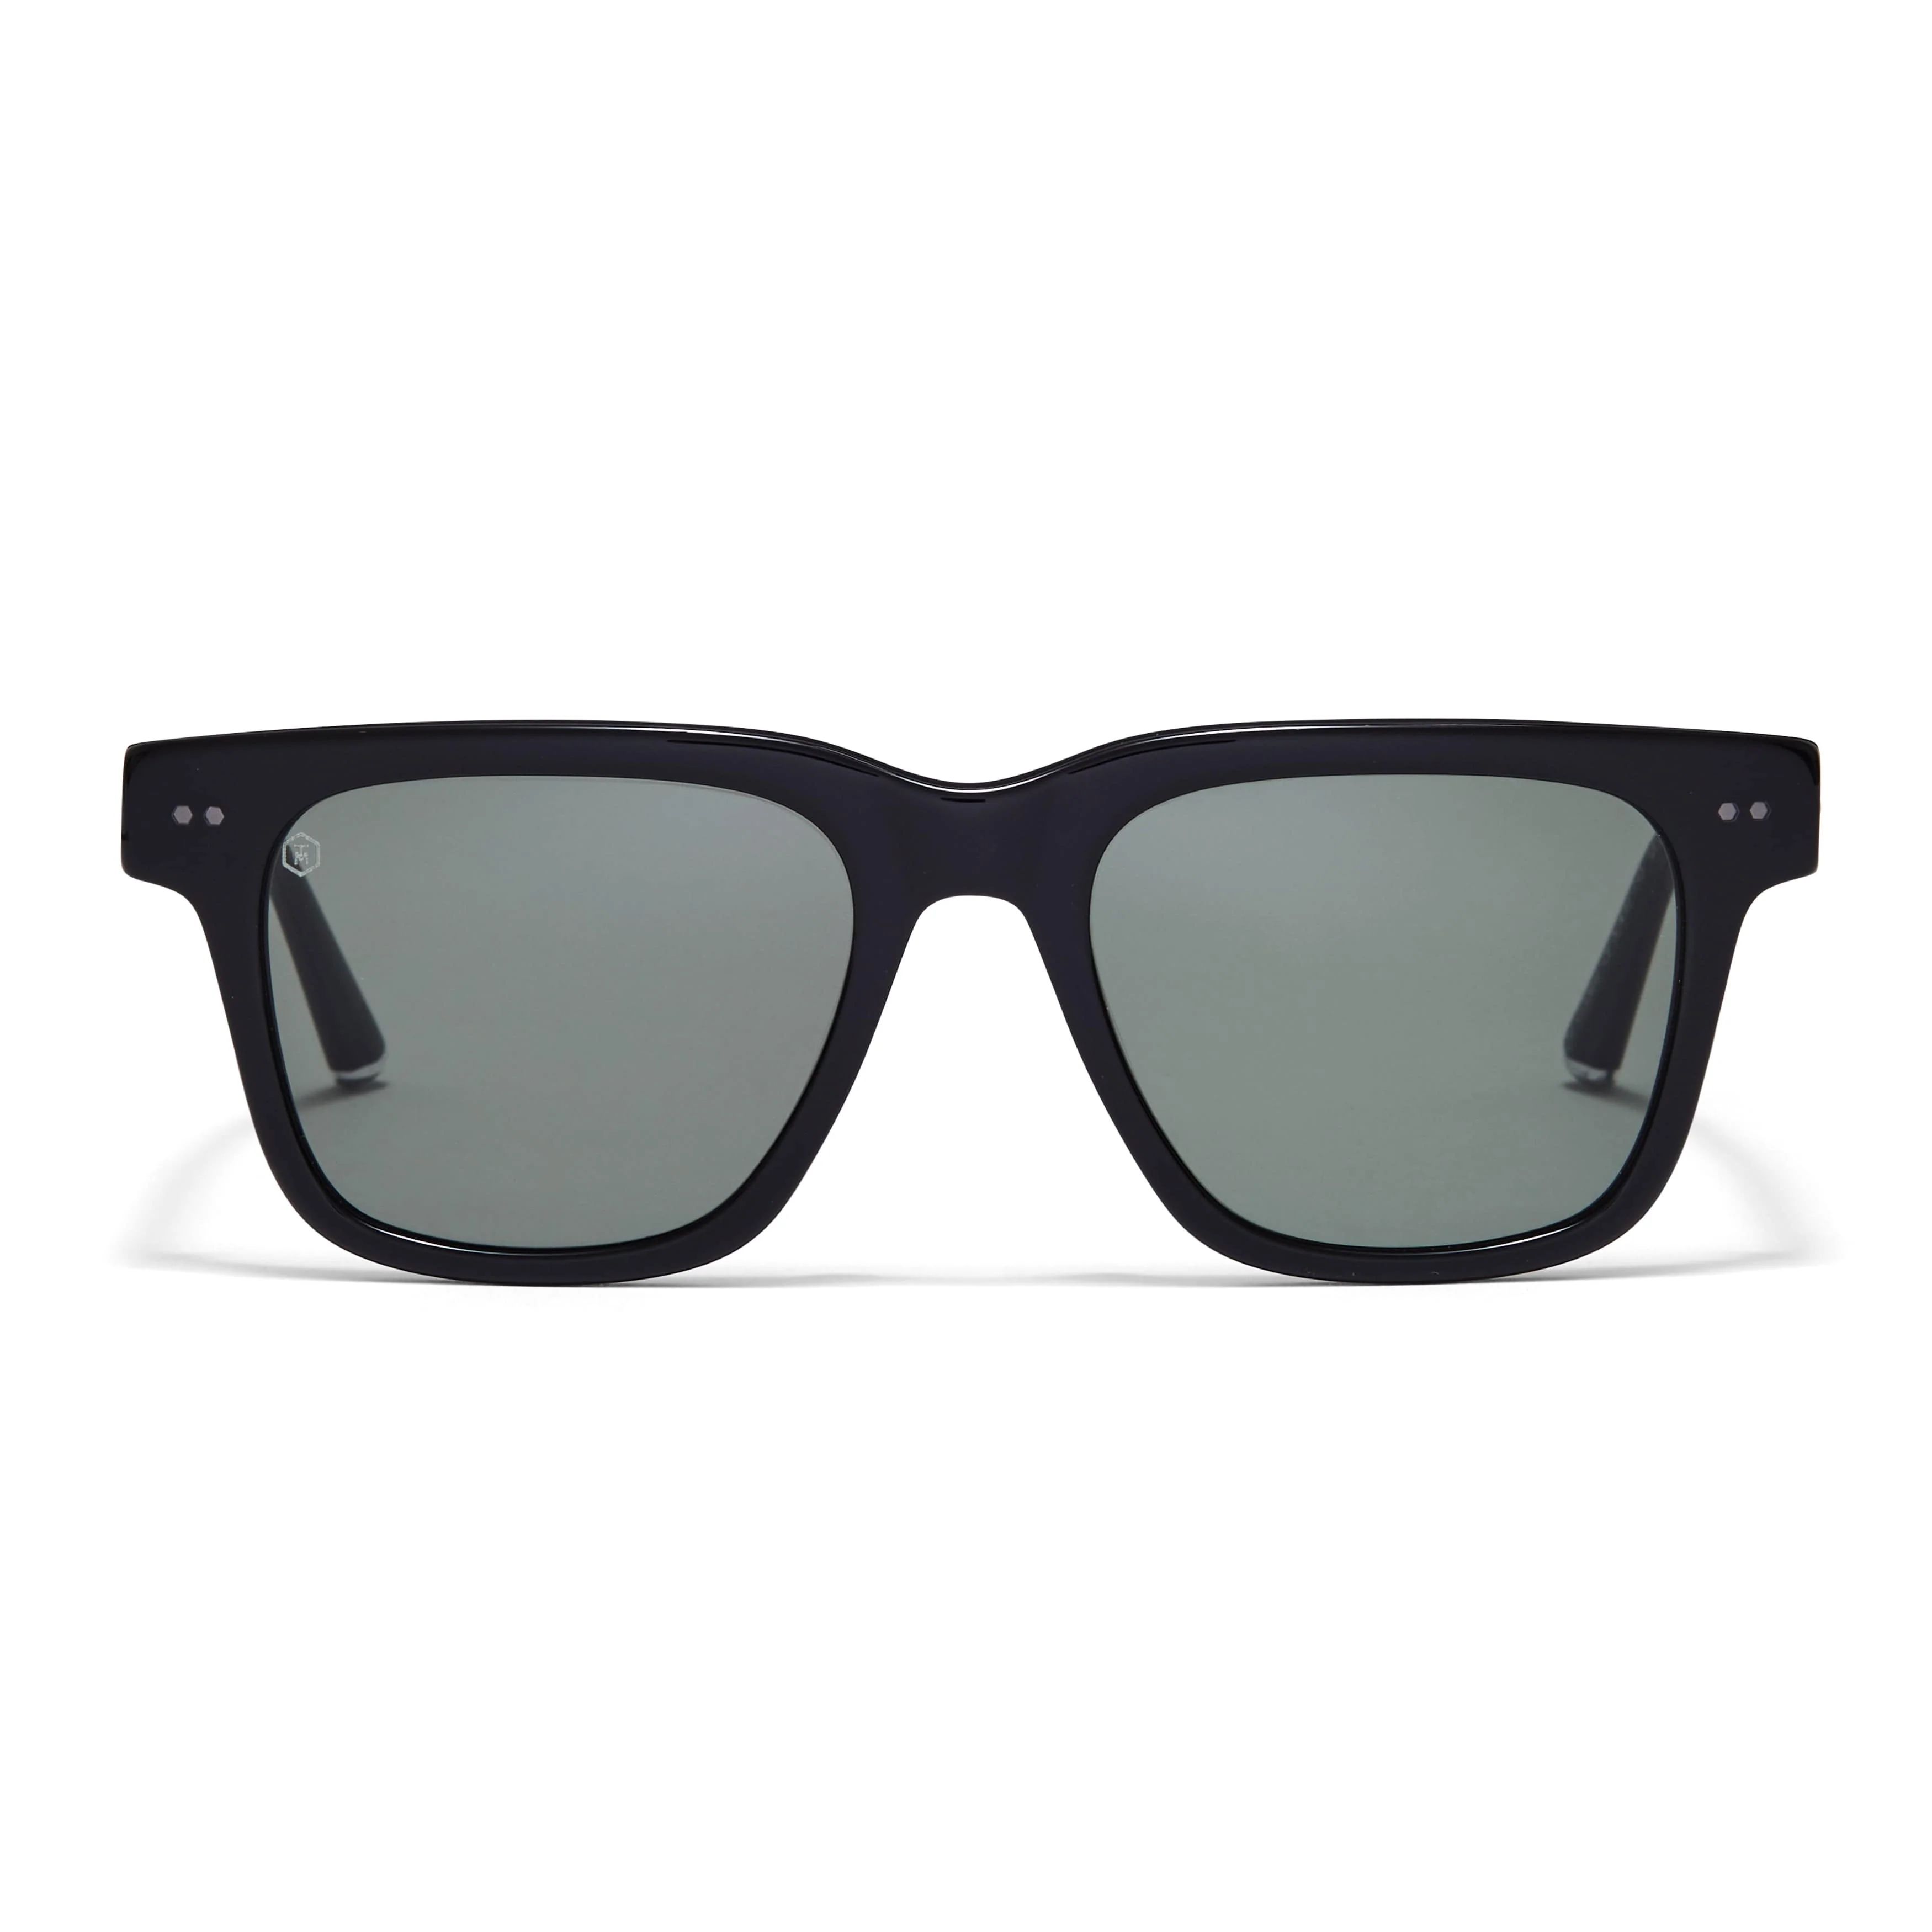 Ladbroke Sunglasses | Taylor Morris Eyewear (UK)